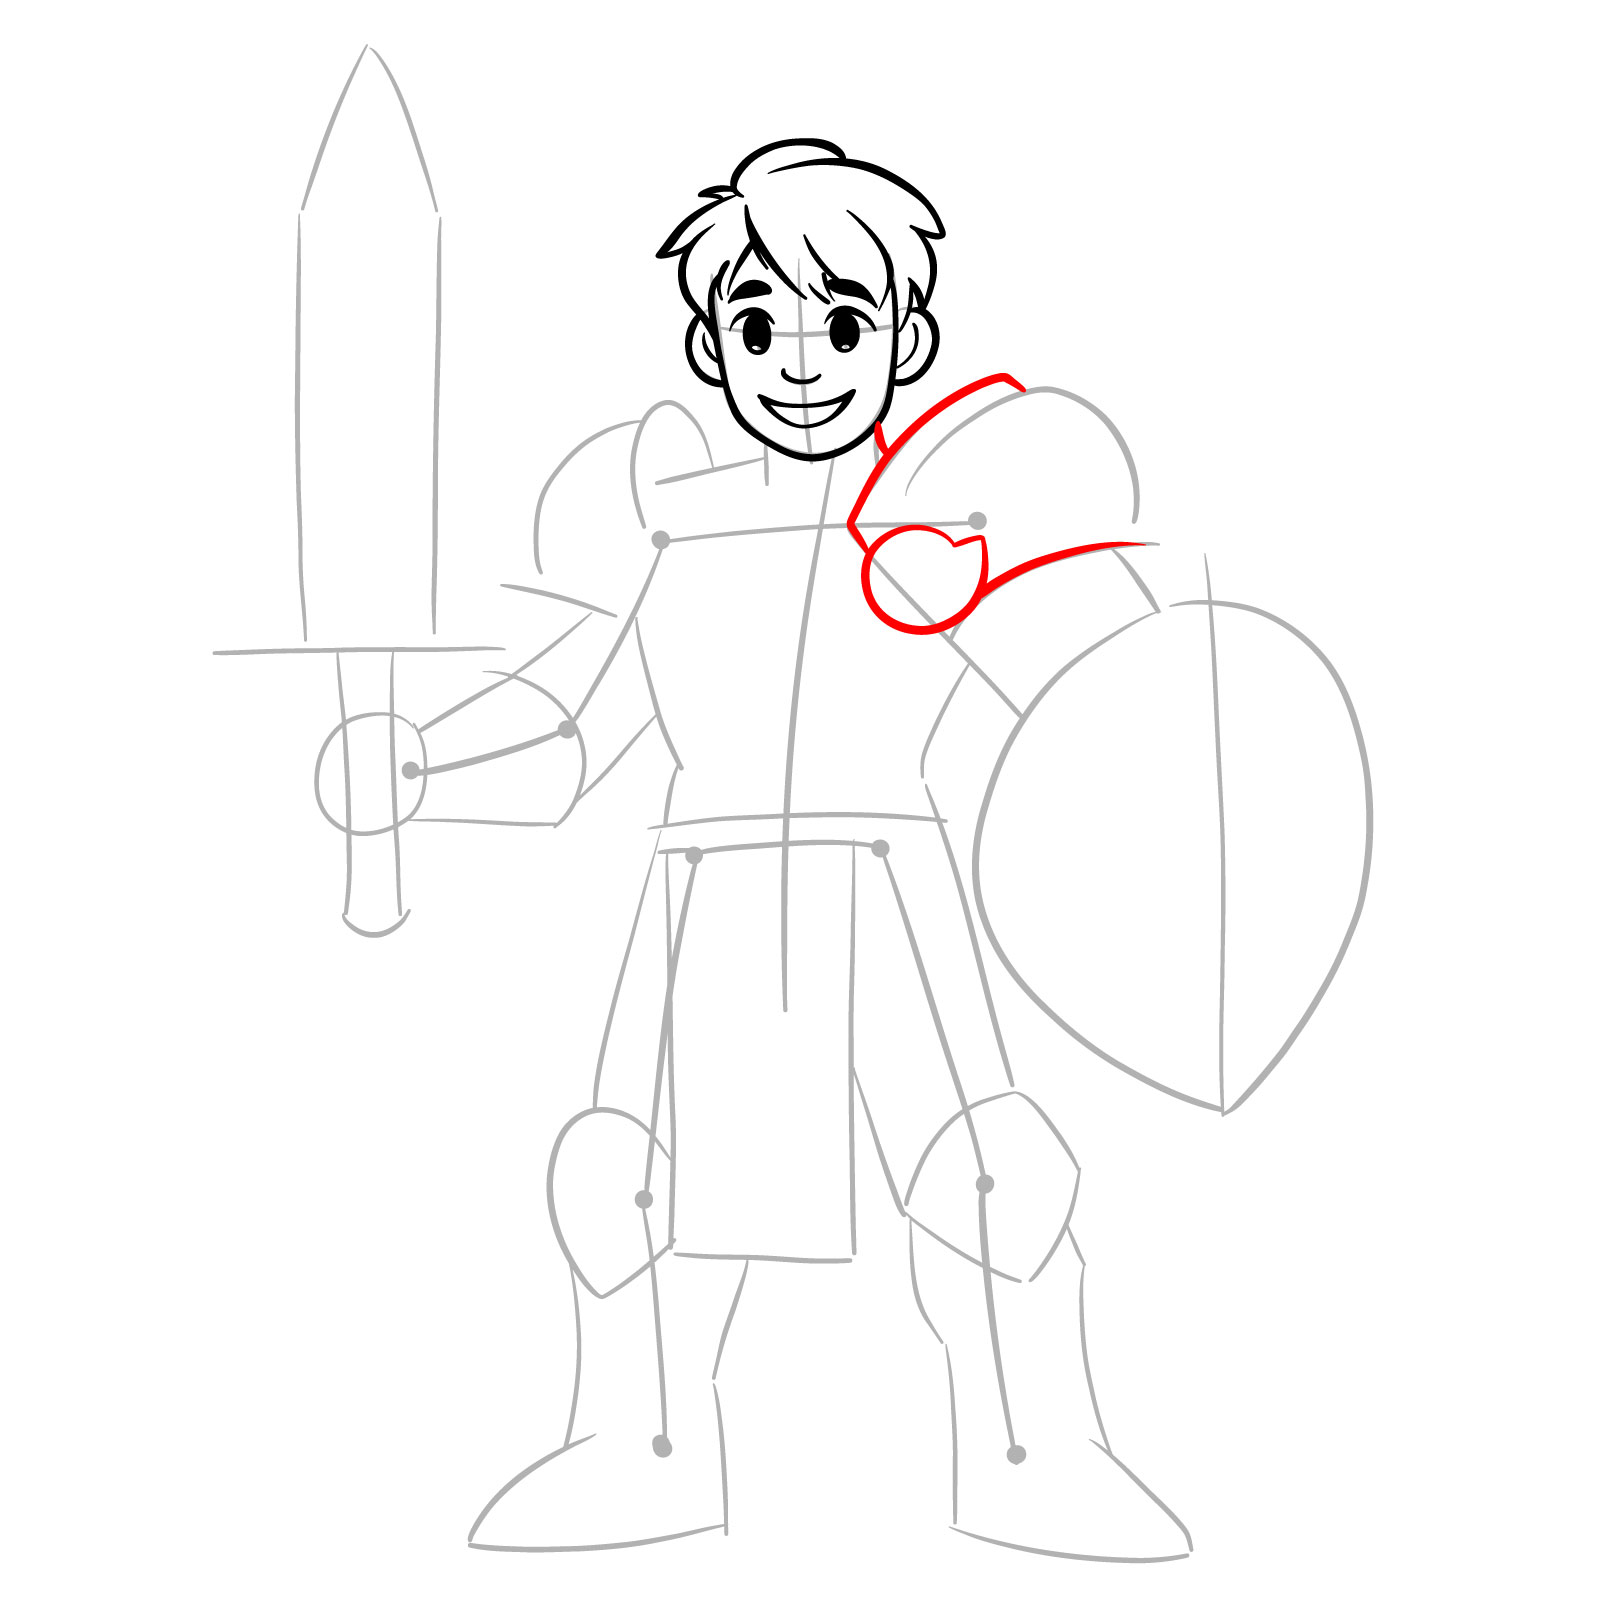 Easy paladin drawing step 8: first shoulder armor outline